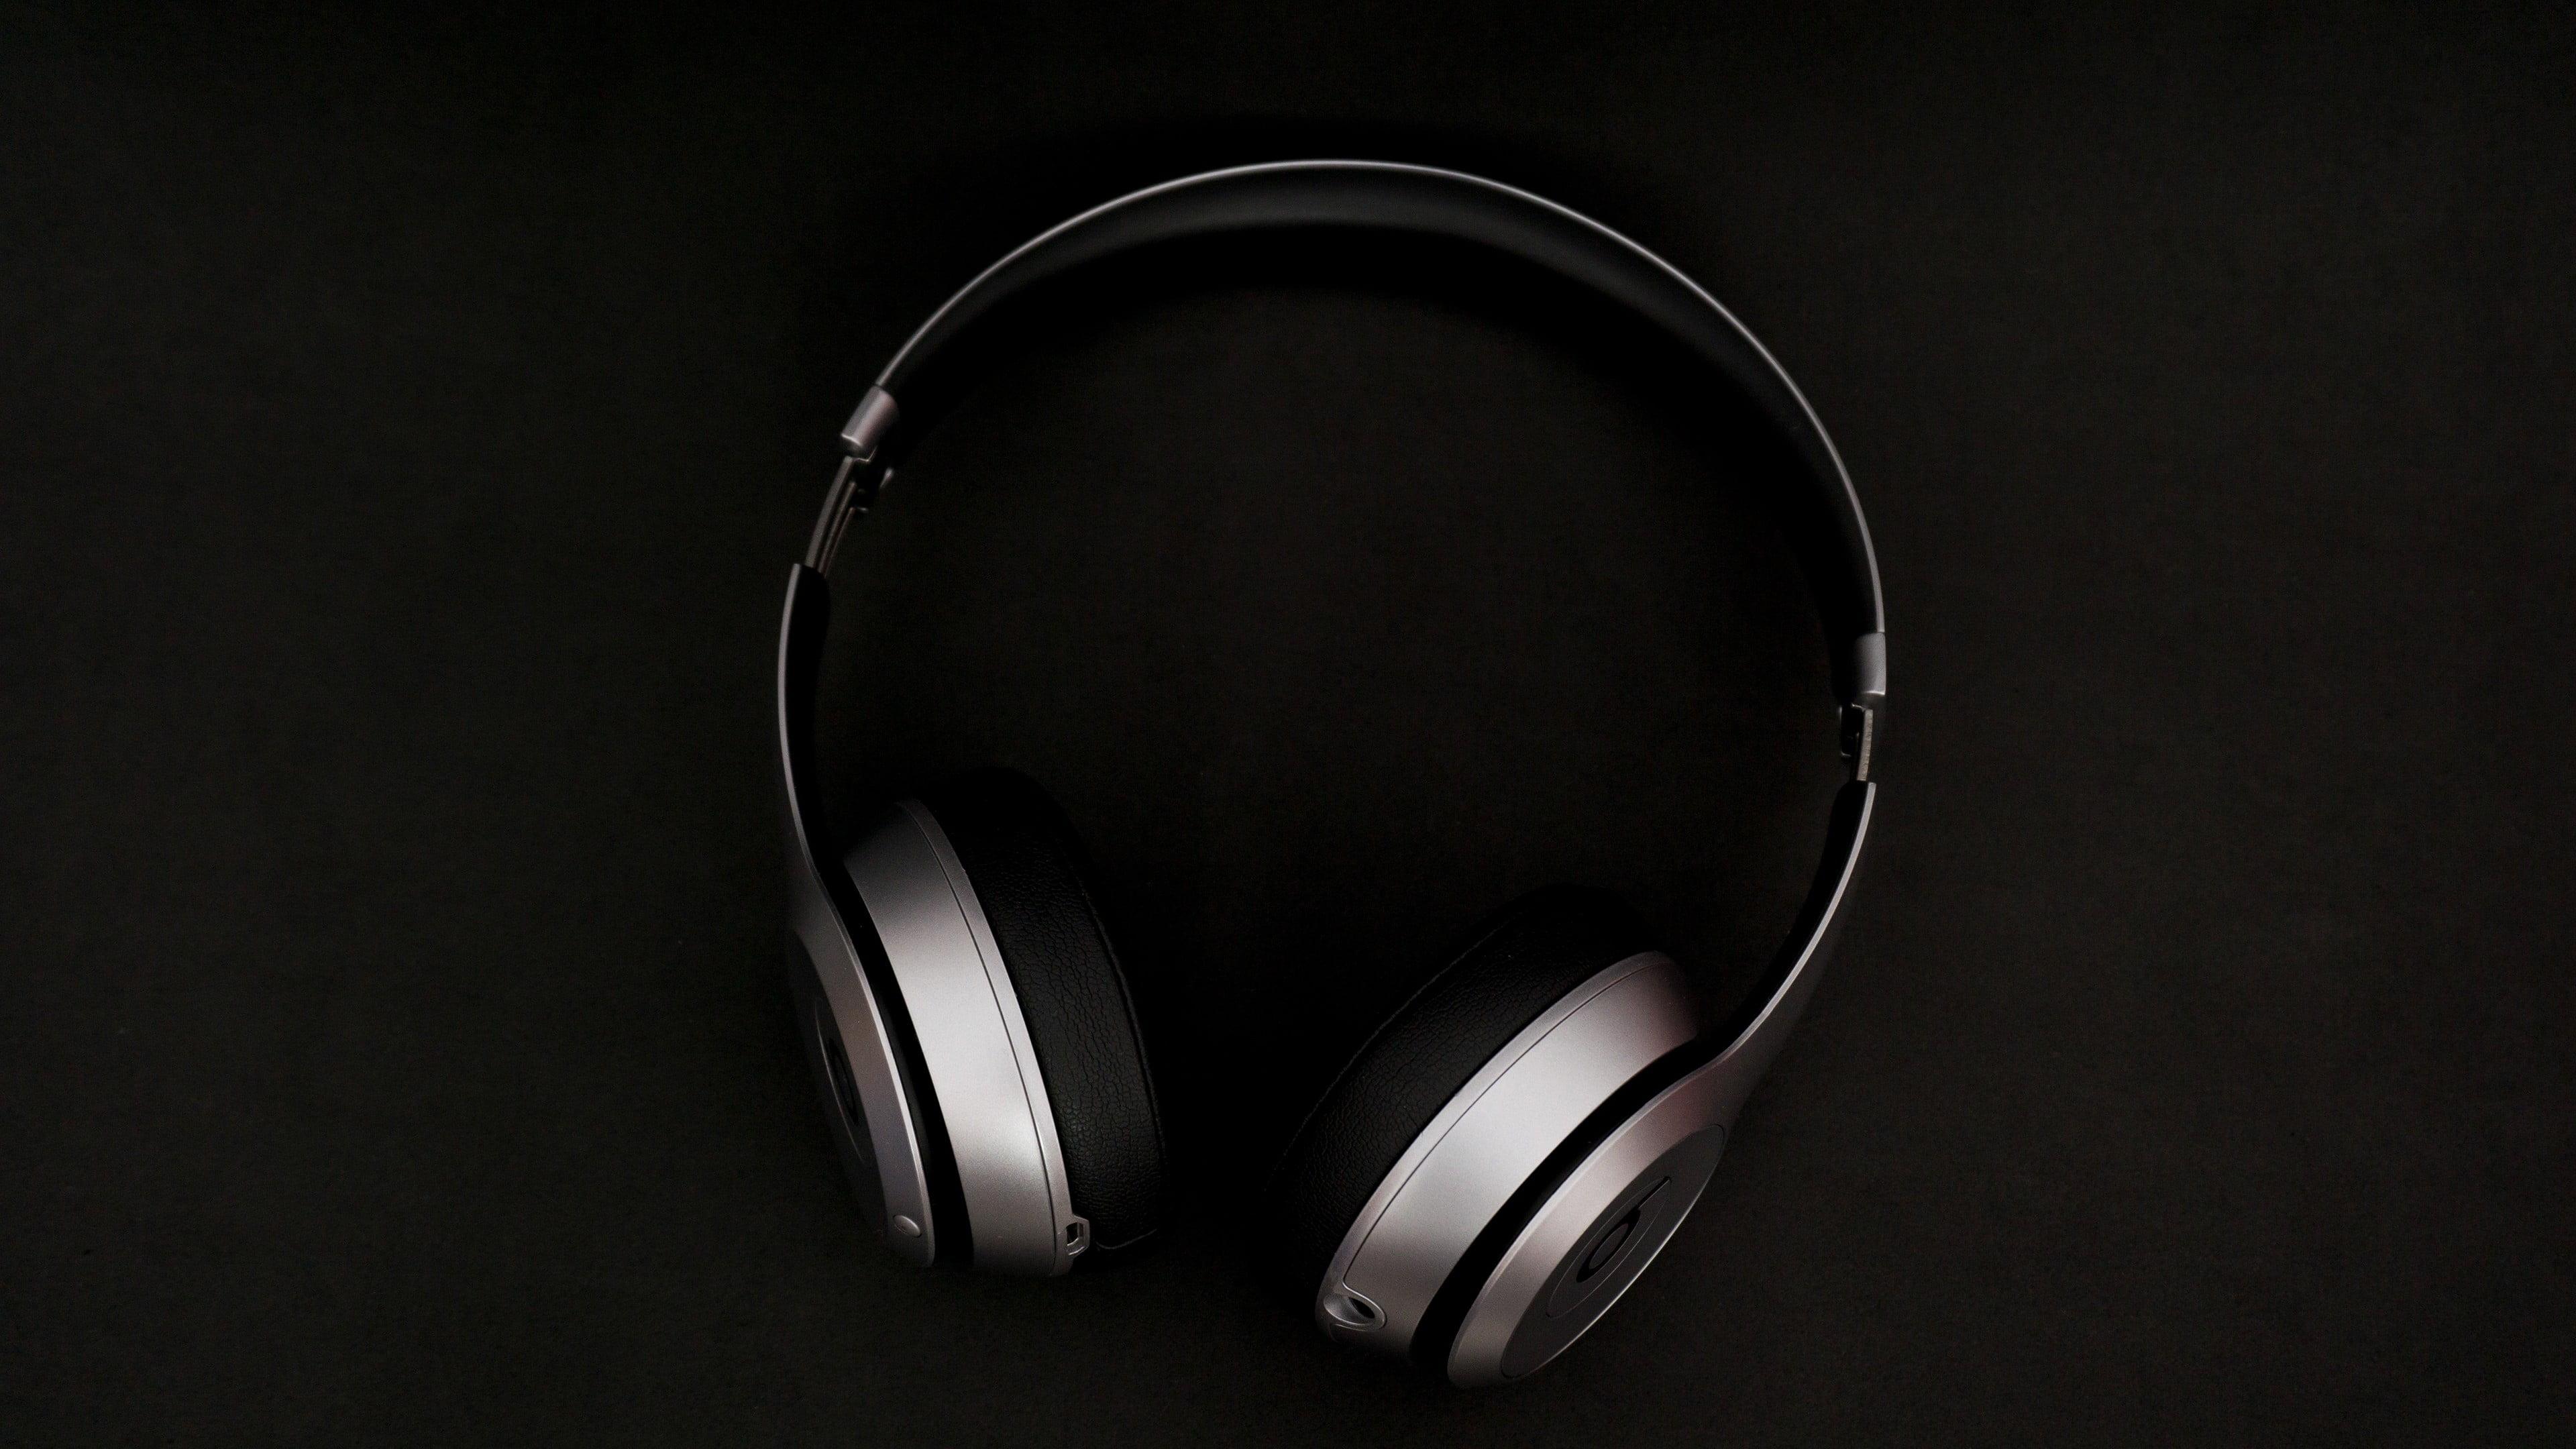 Black and gray wireless headphones, photography, headphones